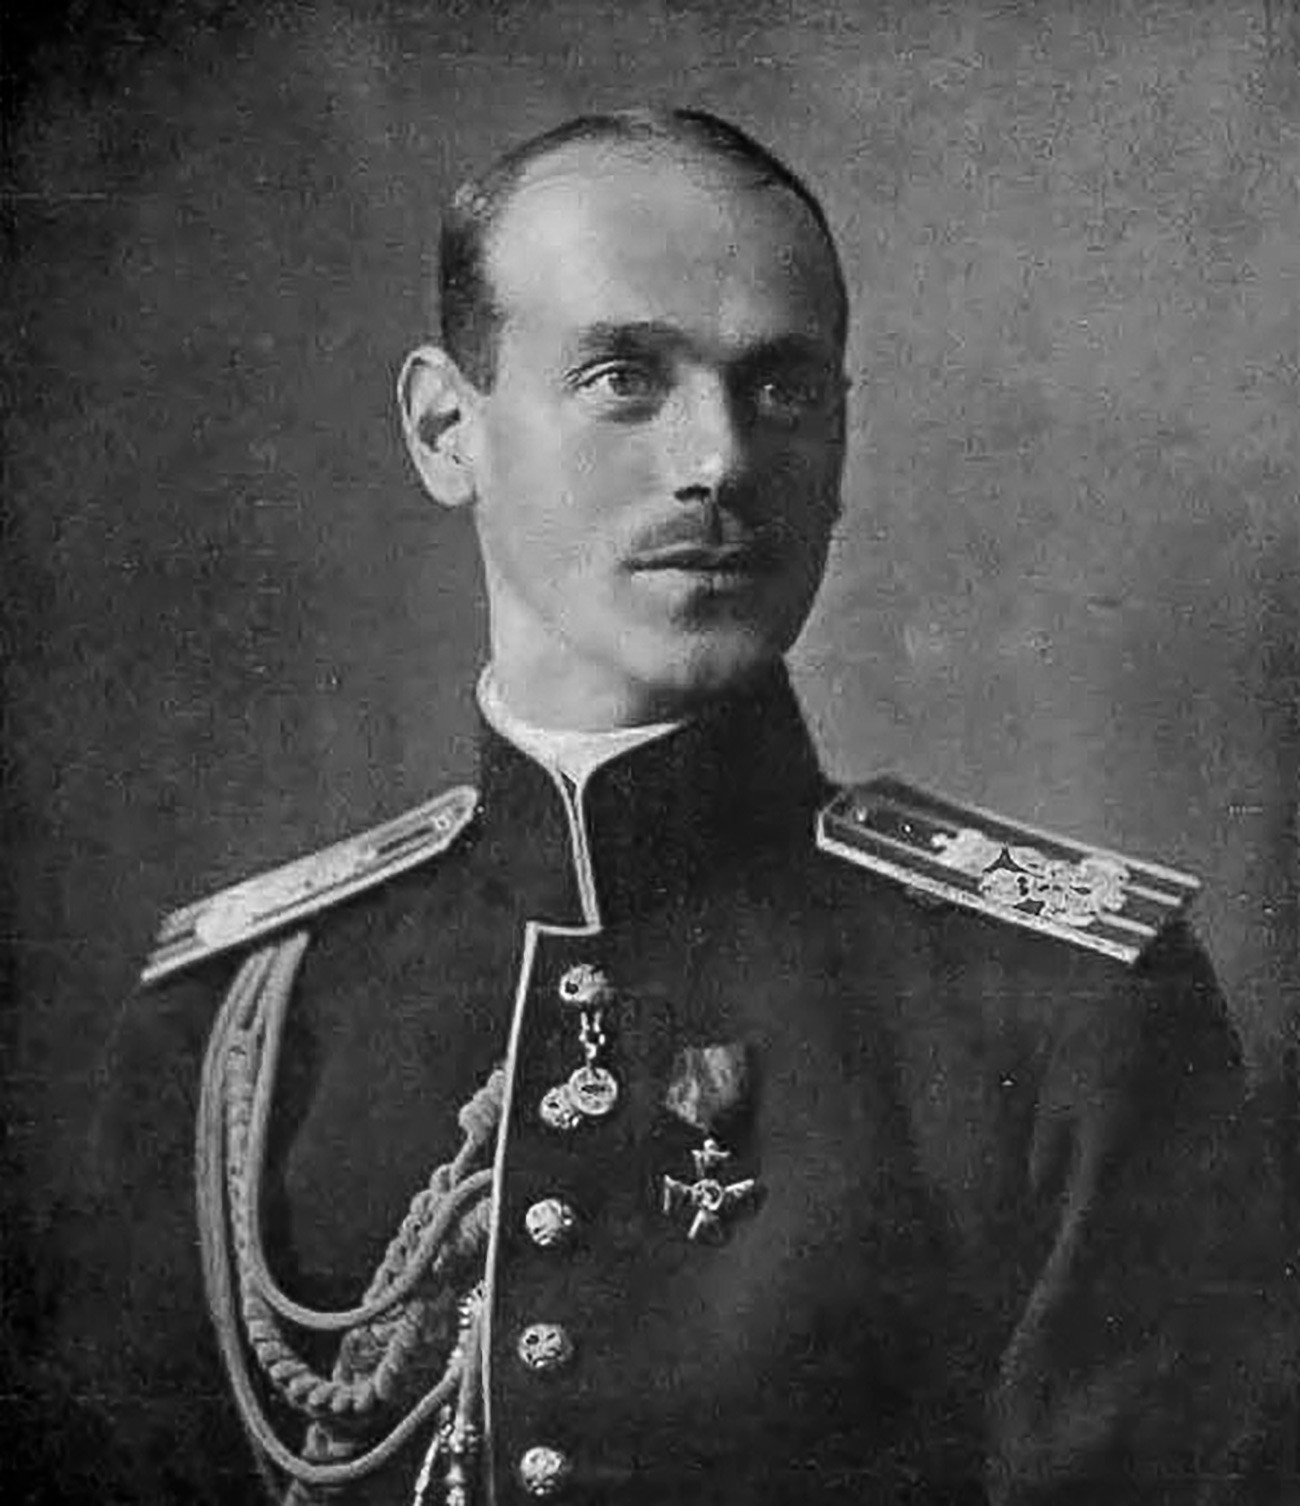 Ruski veliki knez Mihail Aleksandrovič, mlađi brat posljednjeg ruskog cara Nikolaja II.
